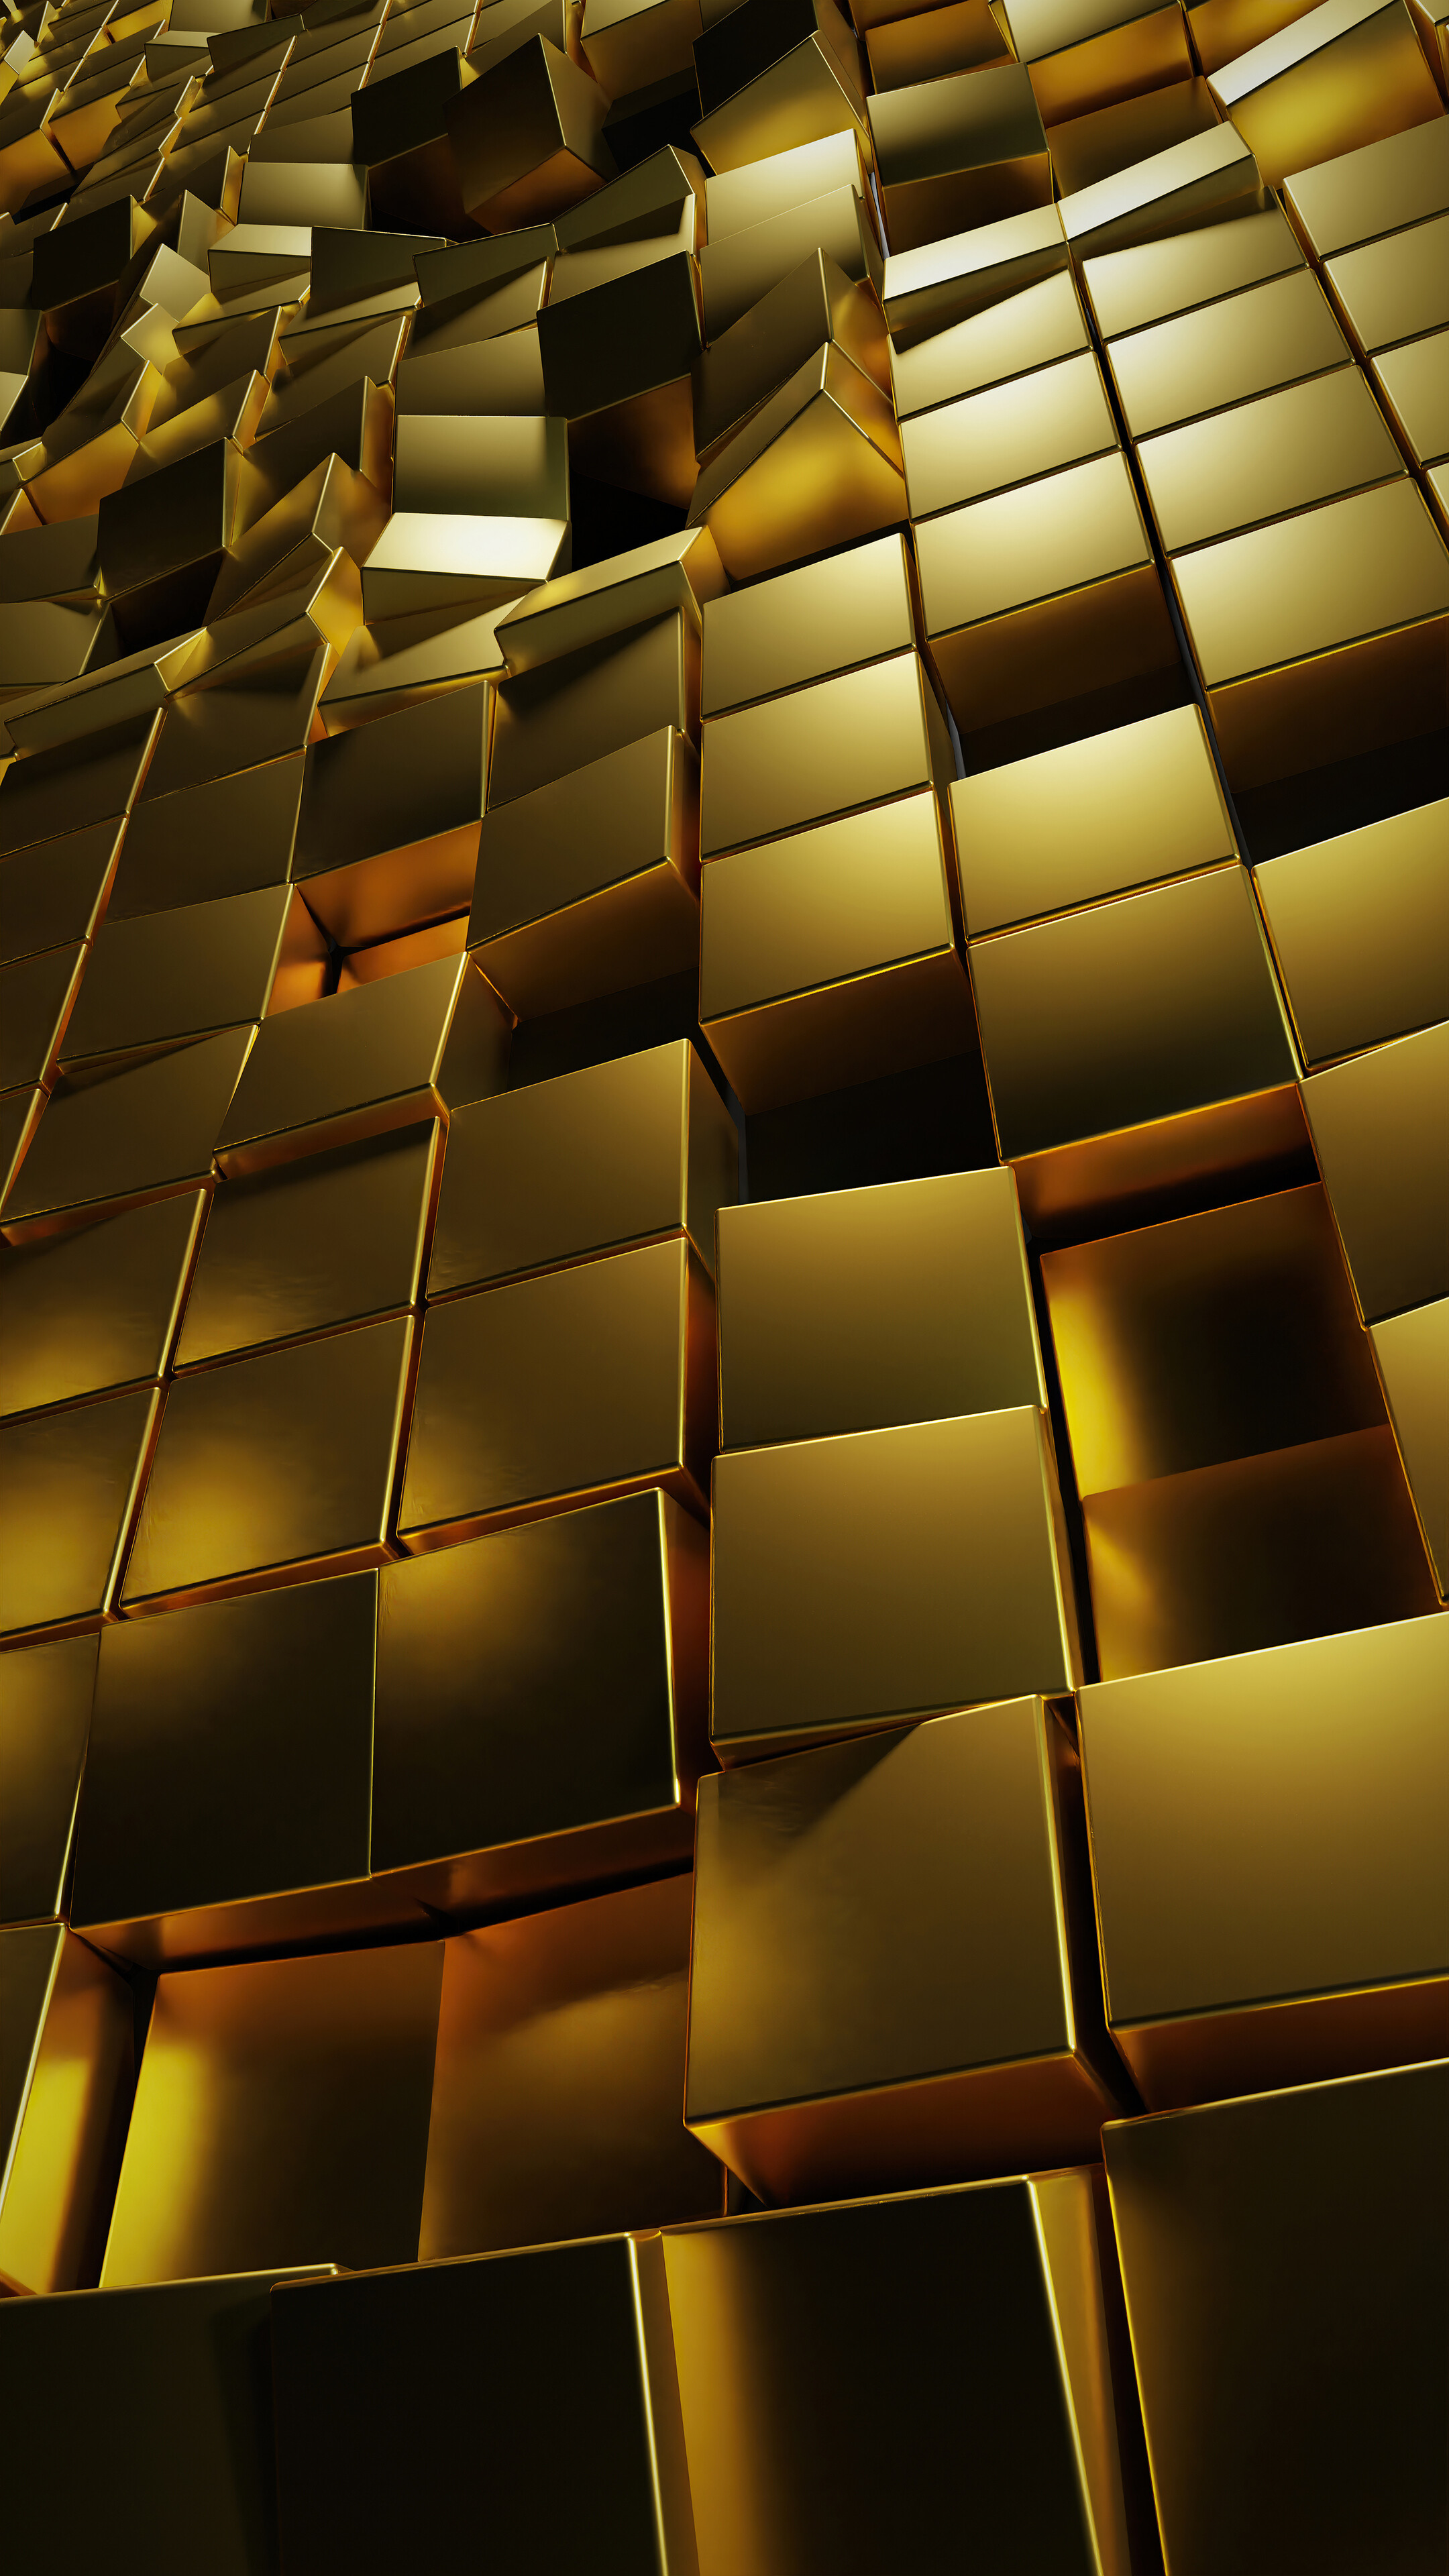 Gold: Gold 3d cubes, The structure made of metallic rectangular blocks, Gold bars. 2160x3840 4K Wallpaper.